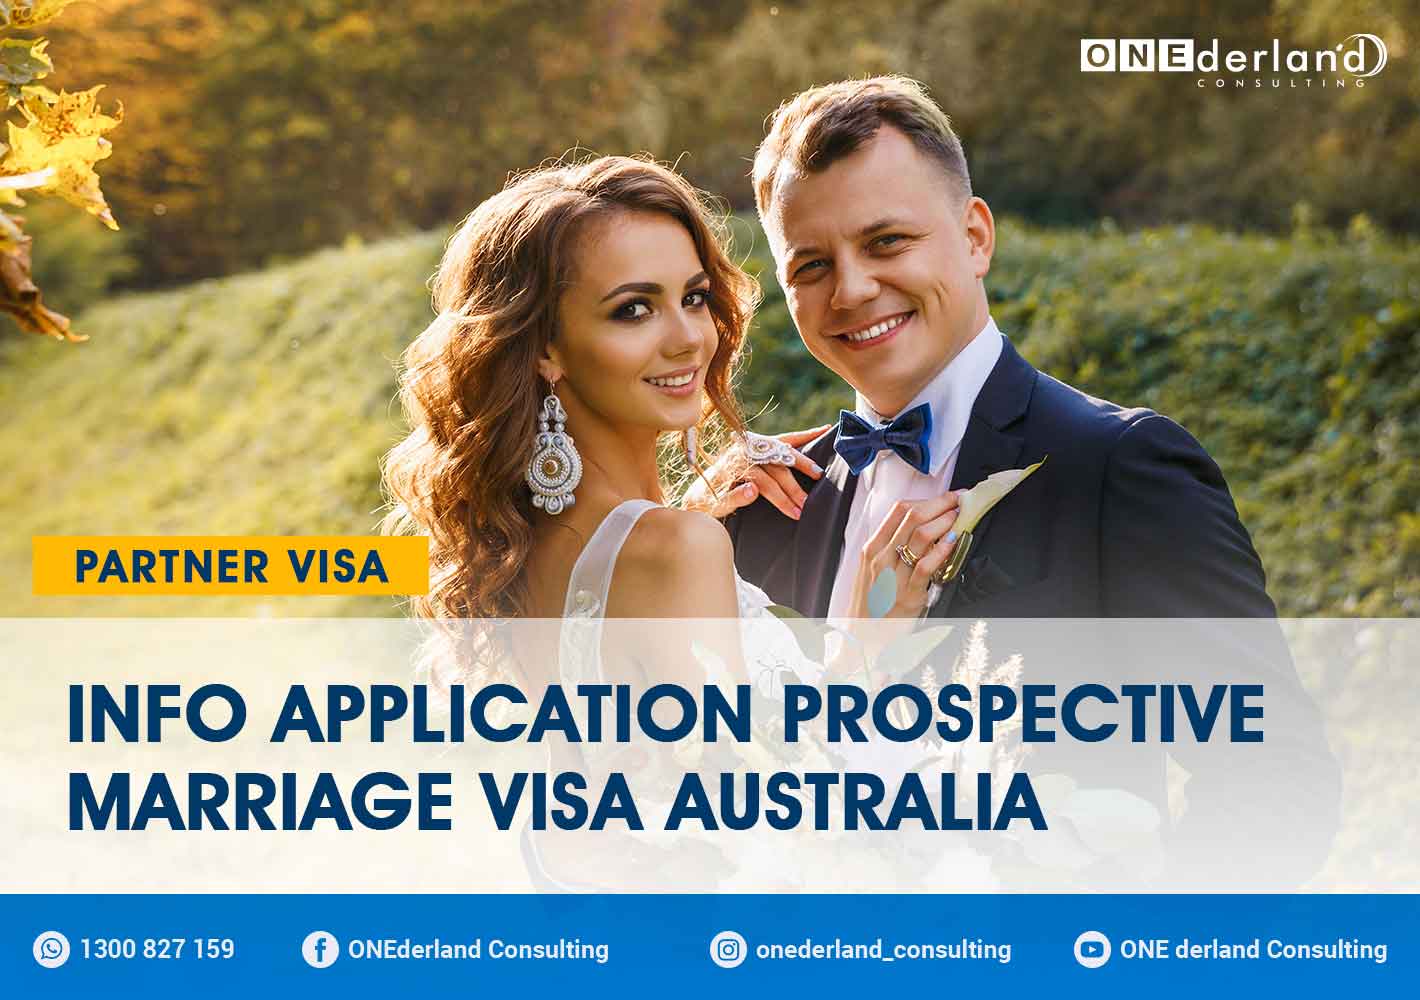 Prospective Marriage Visa Australia Requirements